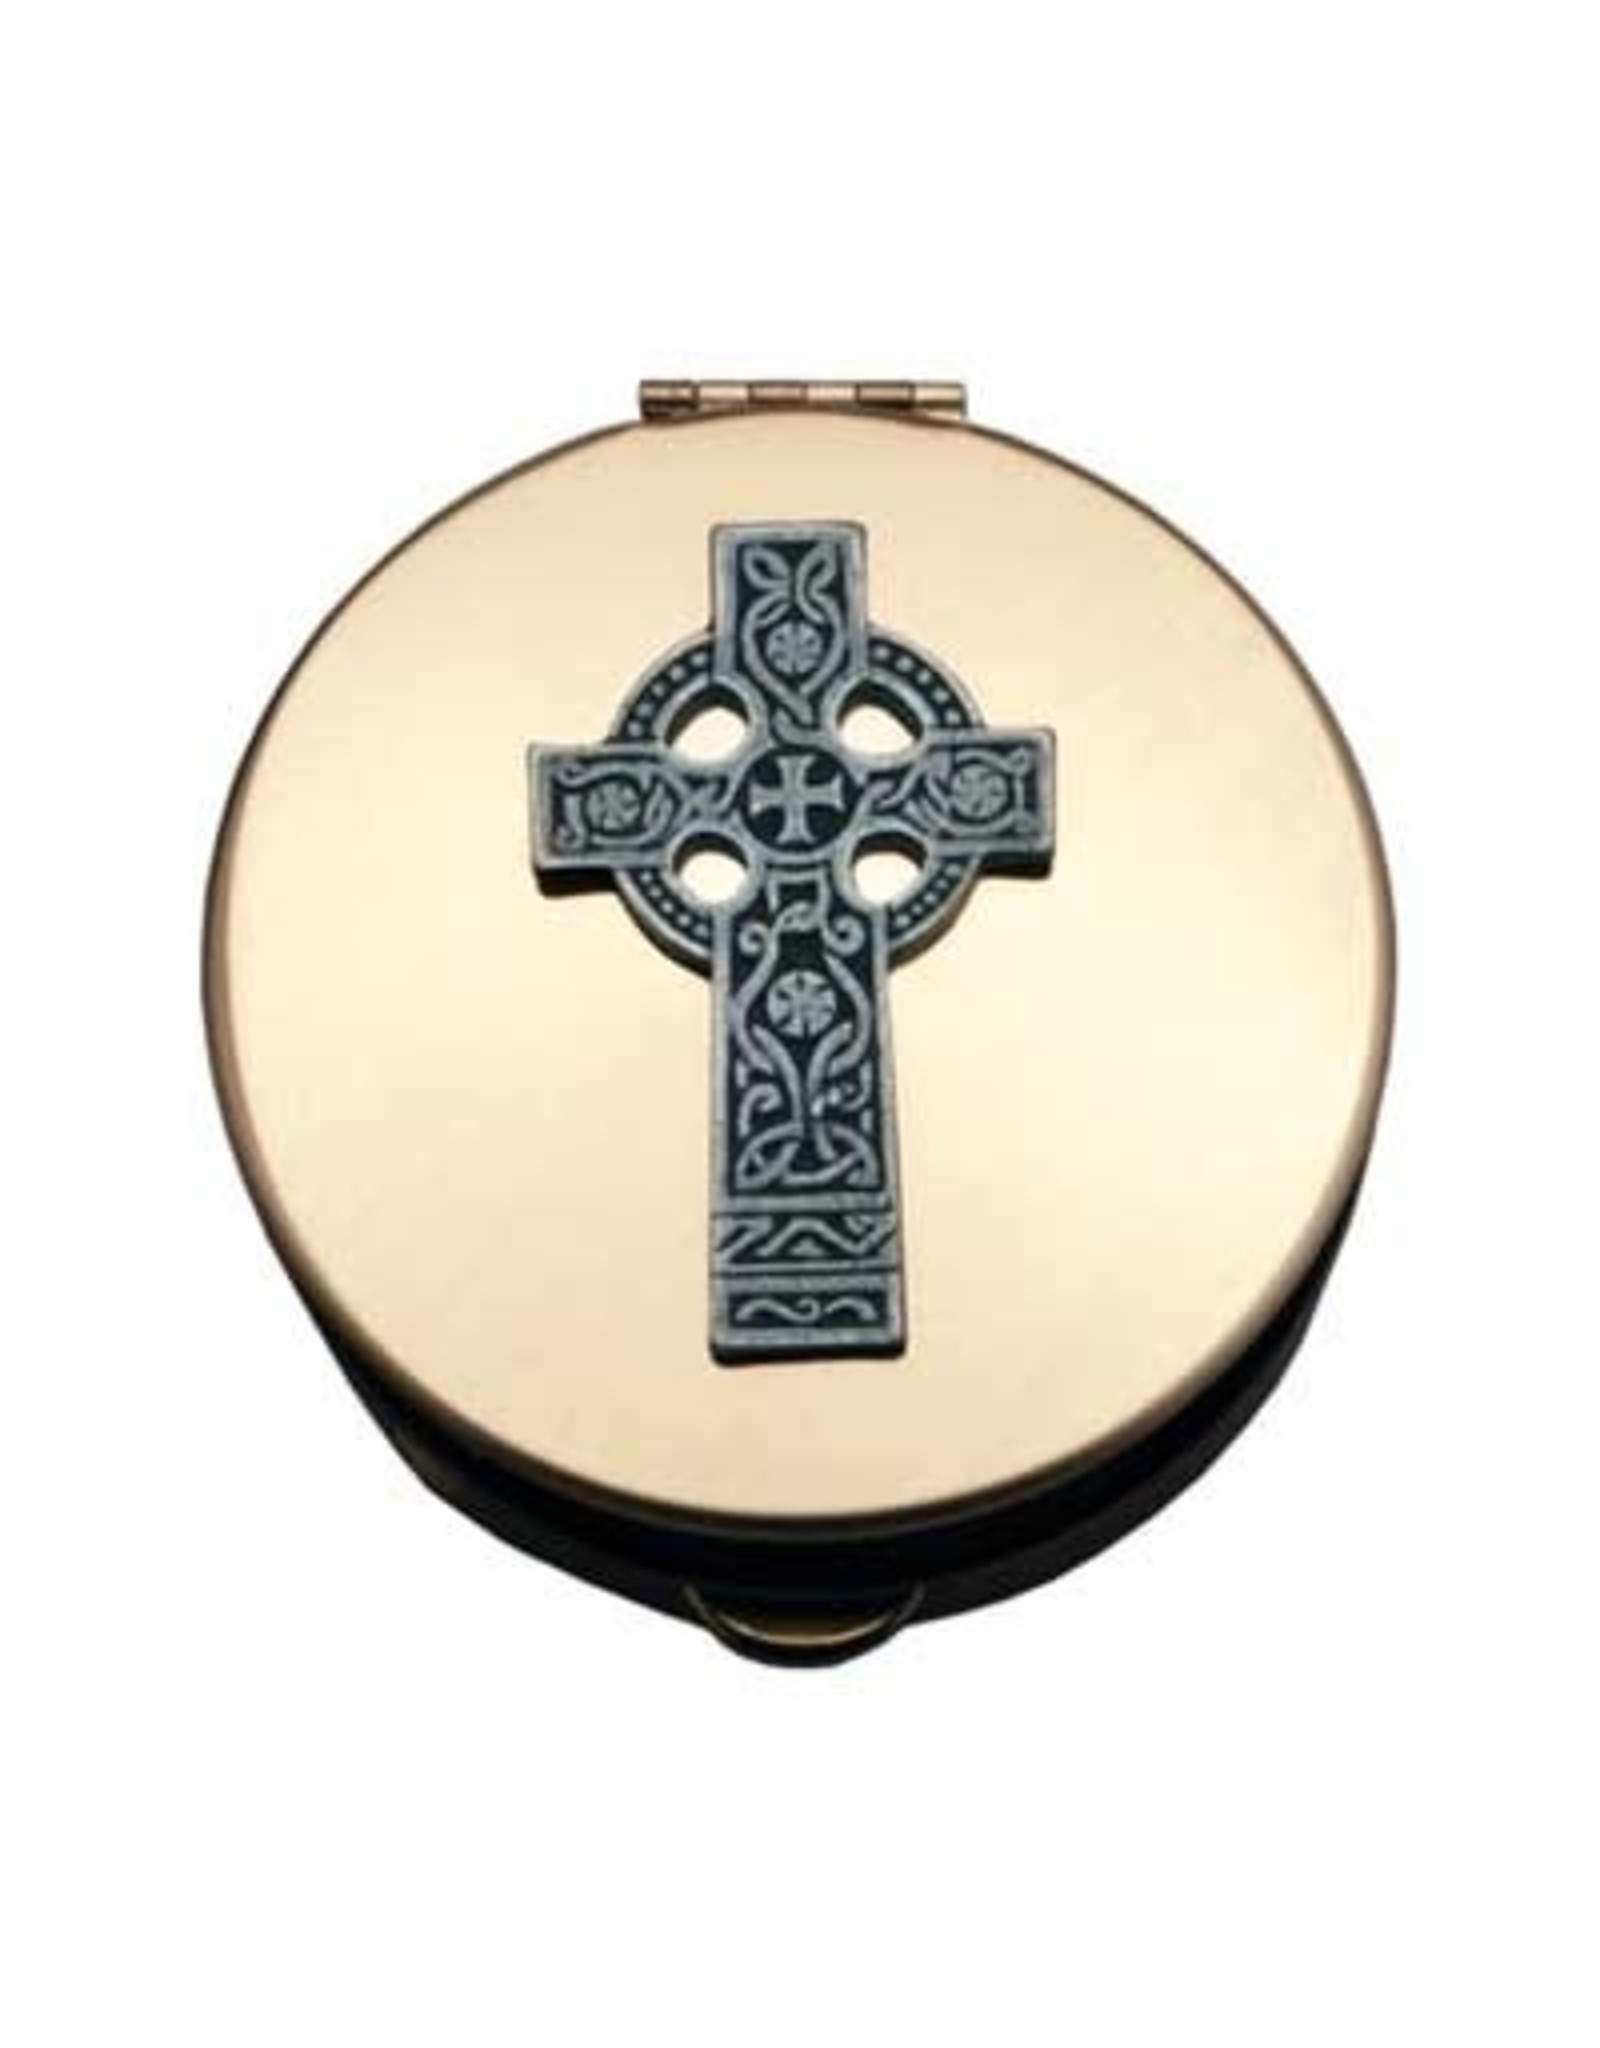 Cathedral Art Pyx - Celtic Cross - Various Sizes